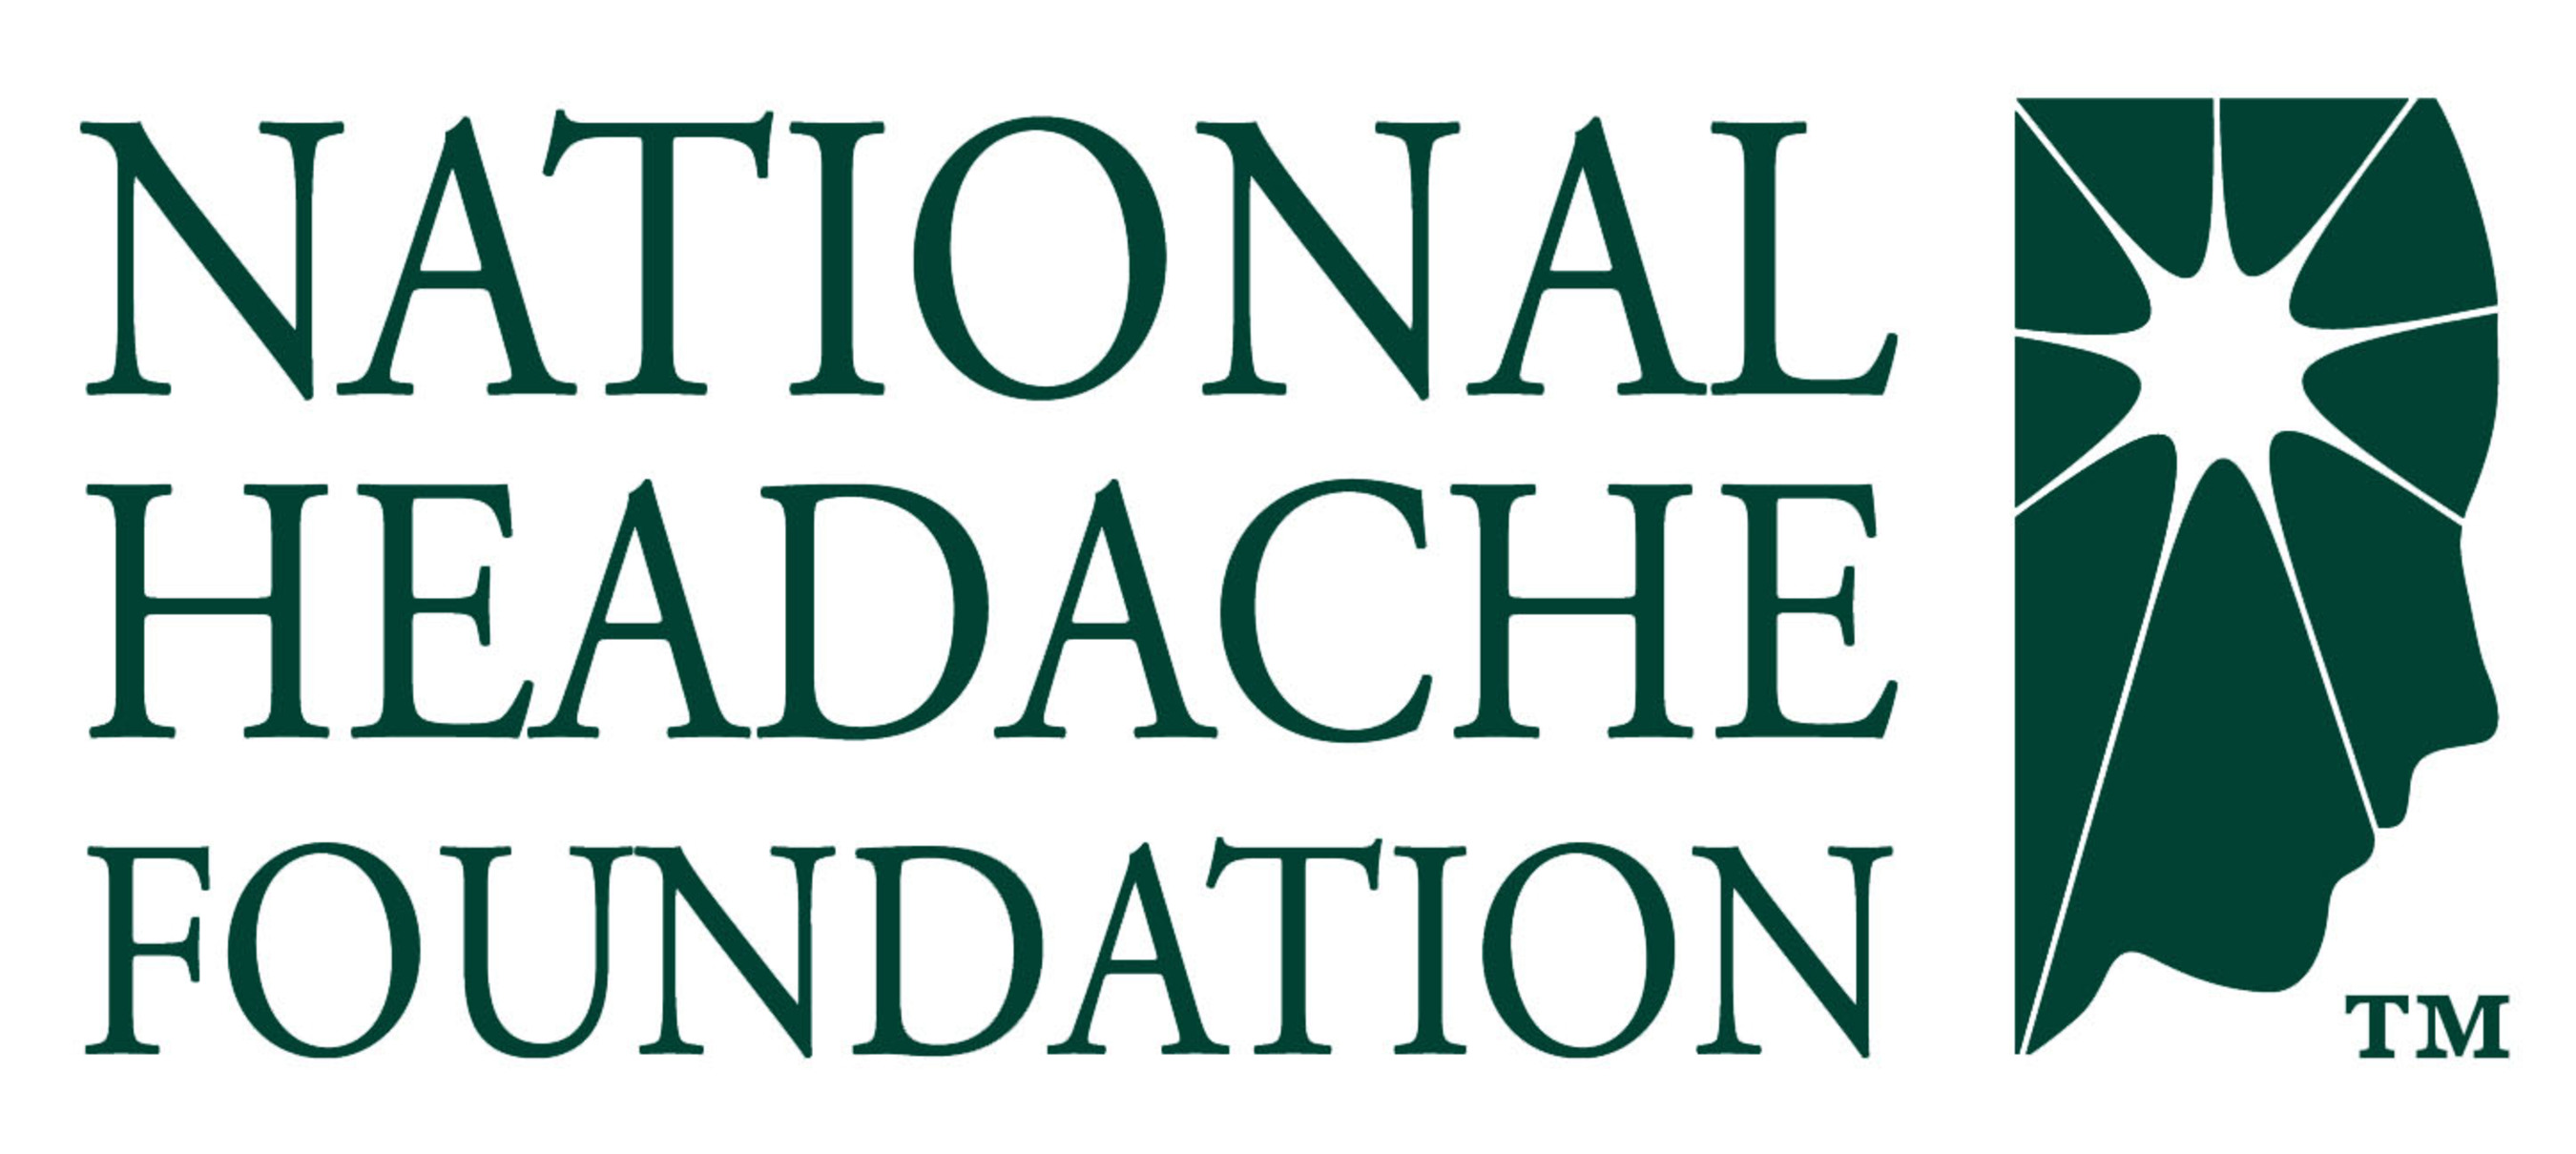 National Headache Foundation logo.